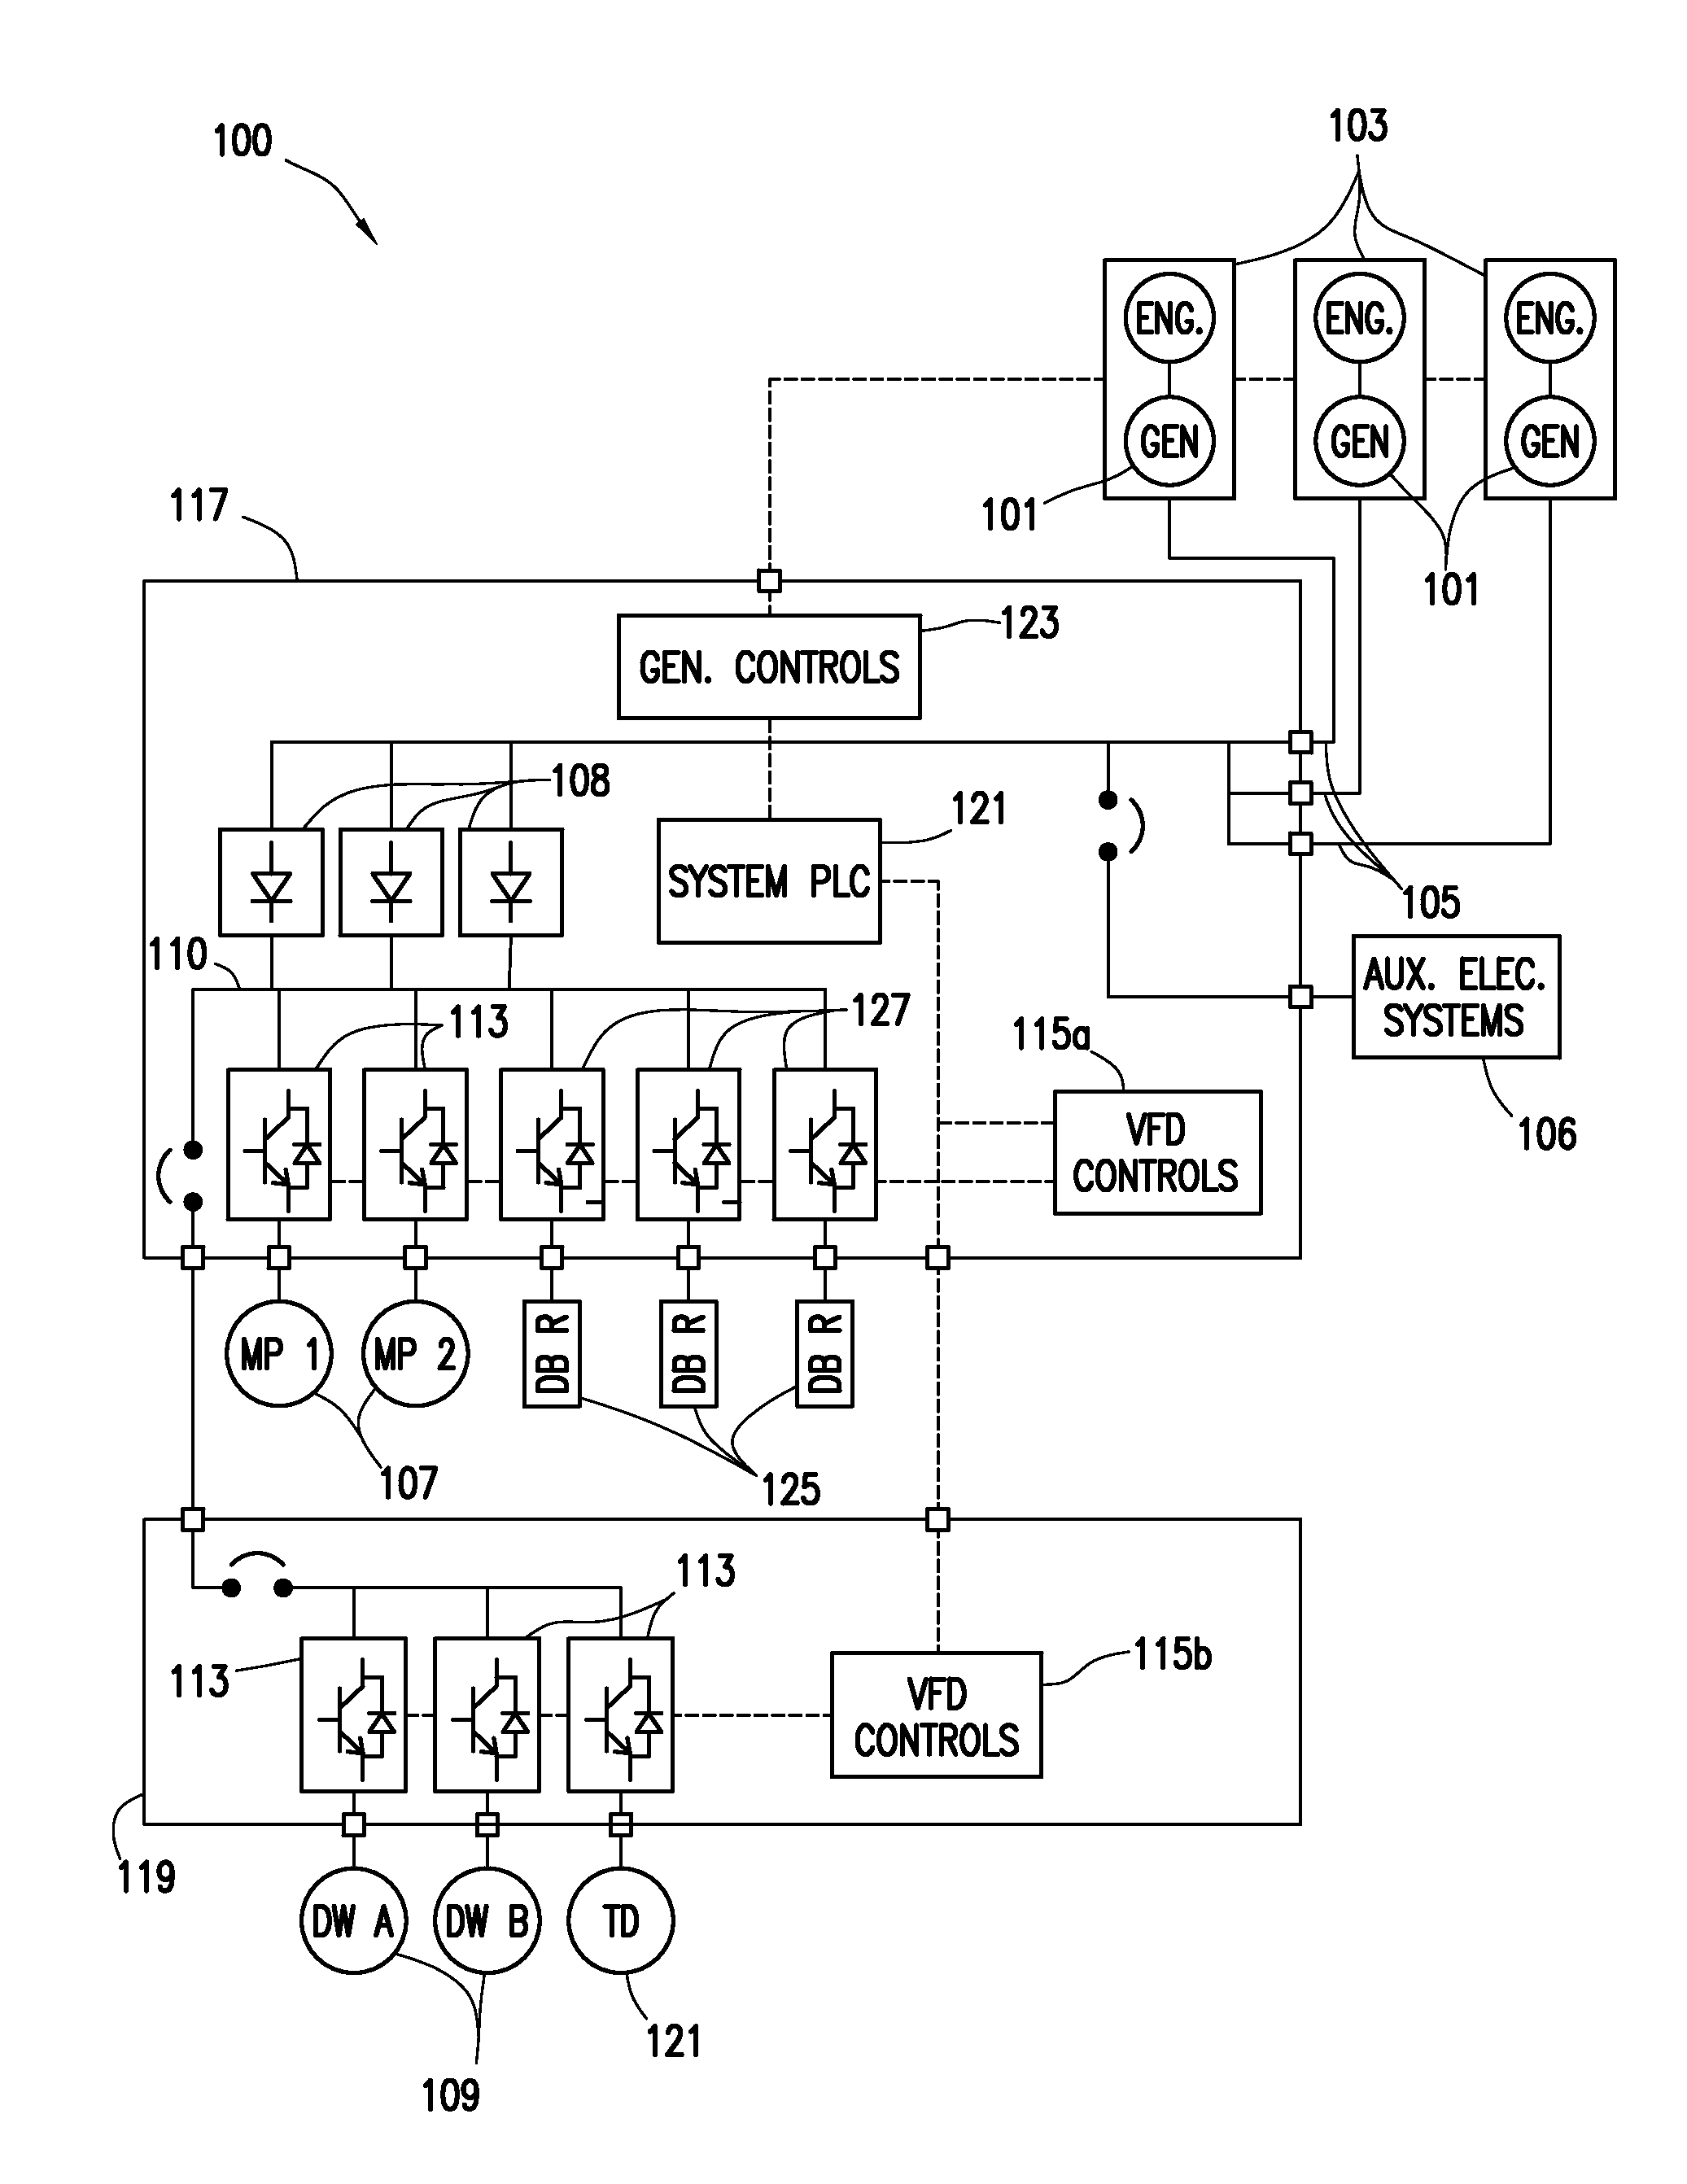 Generator load control